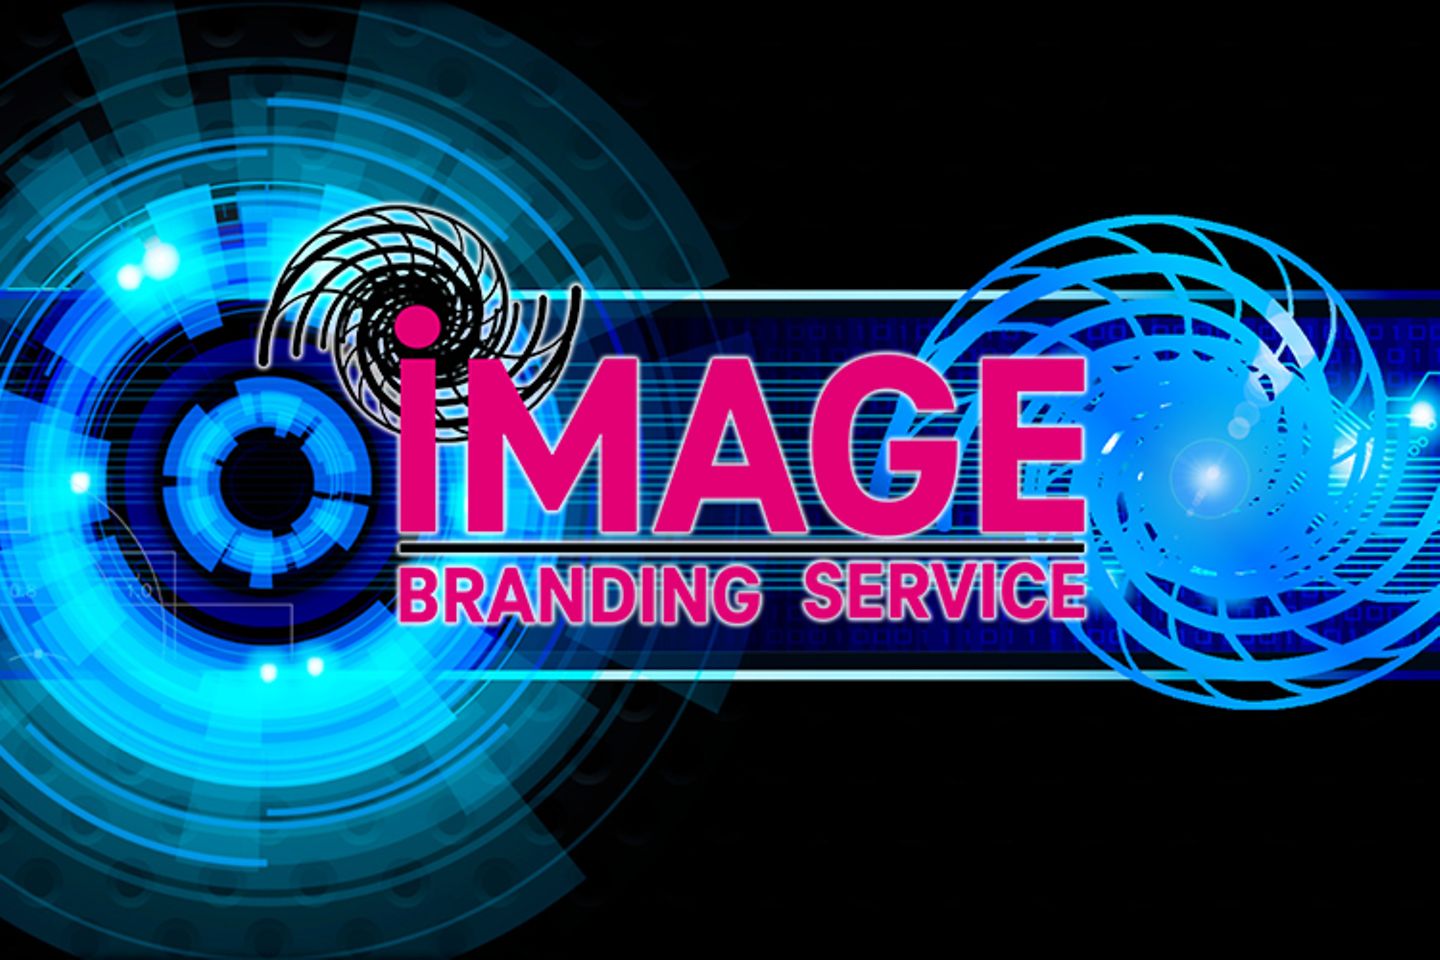 Logotipo de Image Branding Service de T-Systems